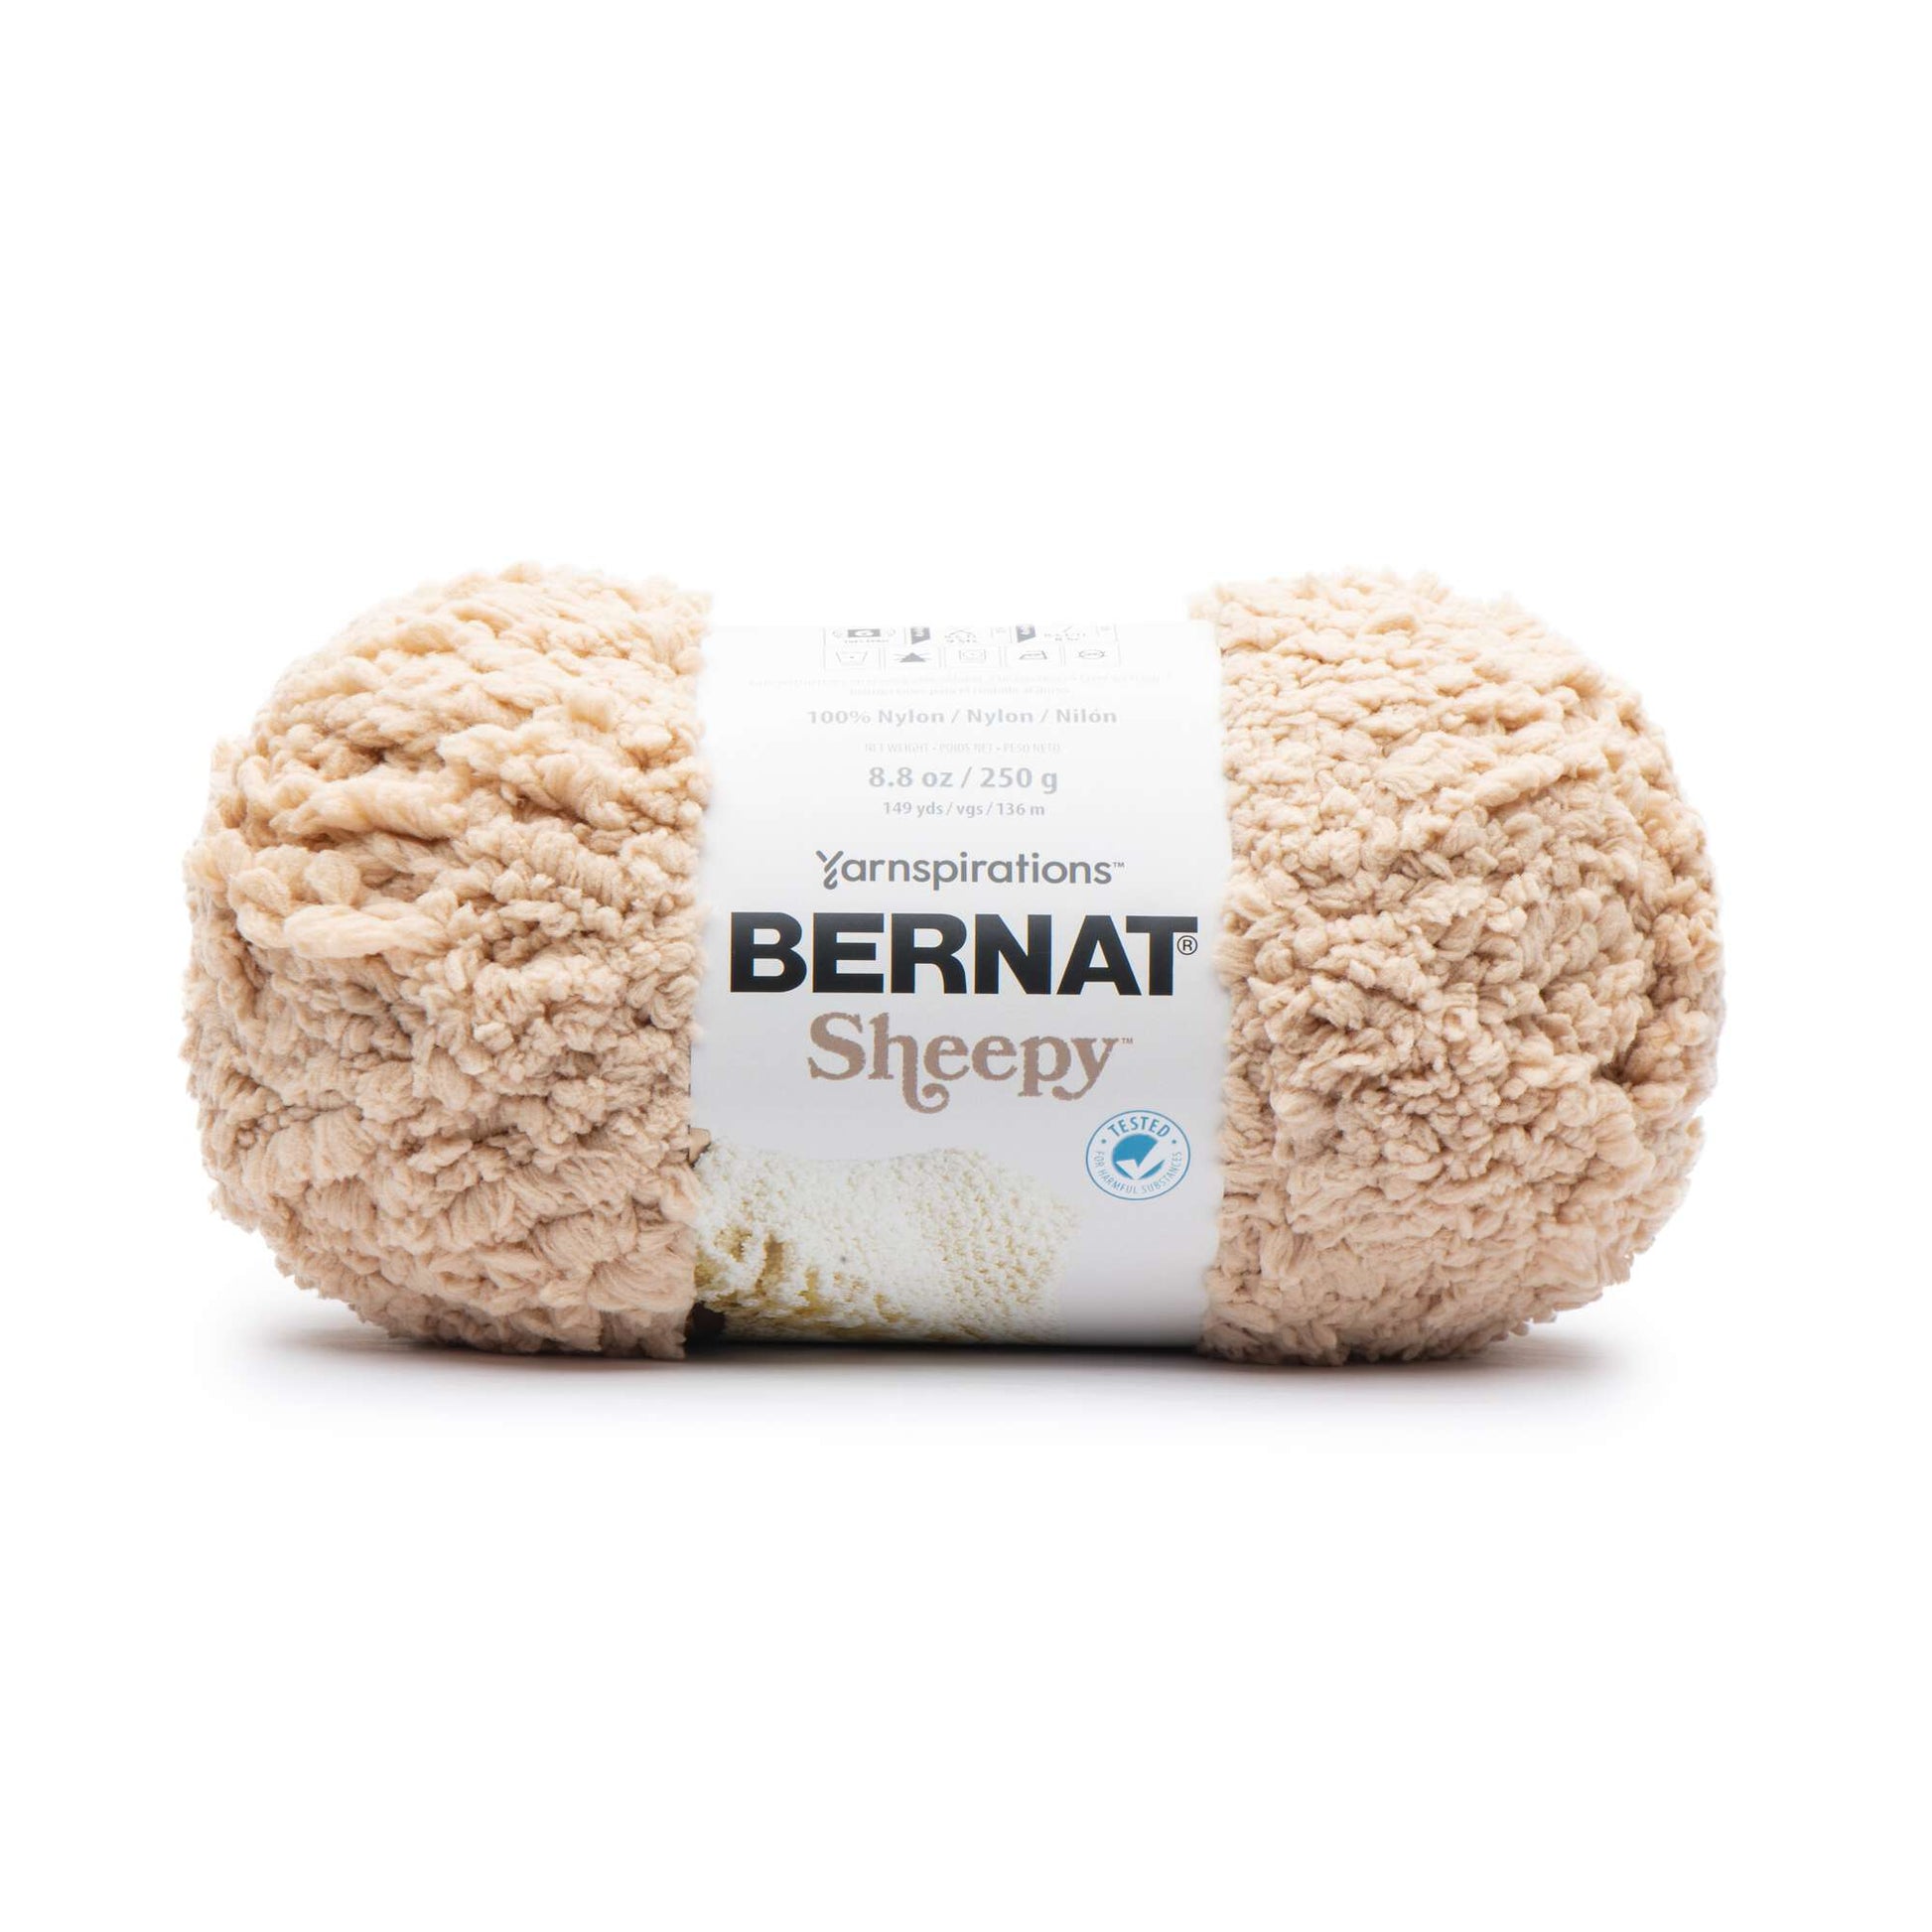 Bernat Sheepy Yarn - Clearance Shades